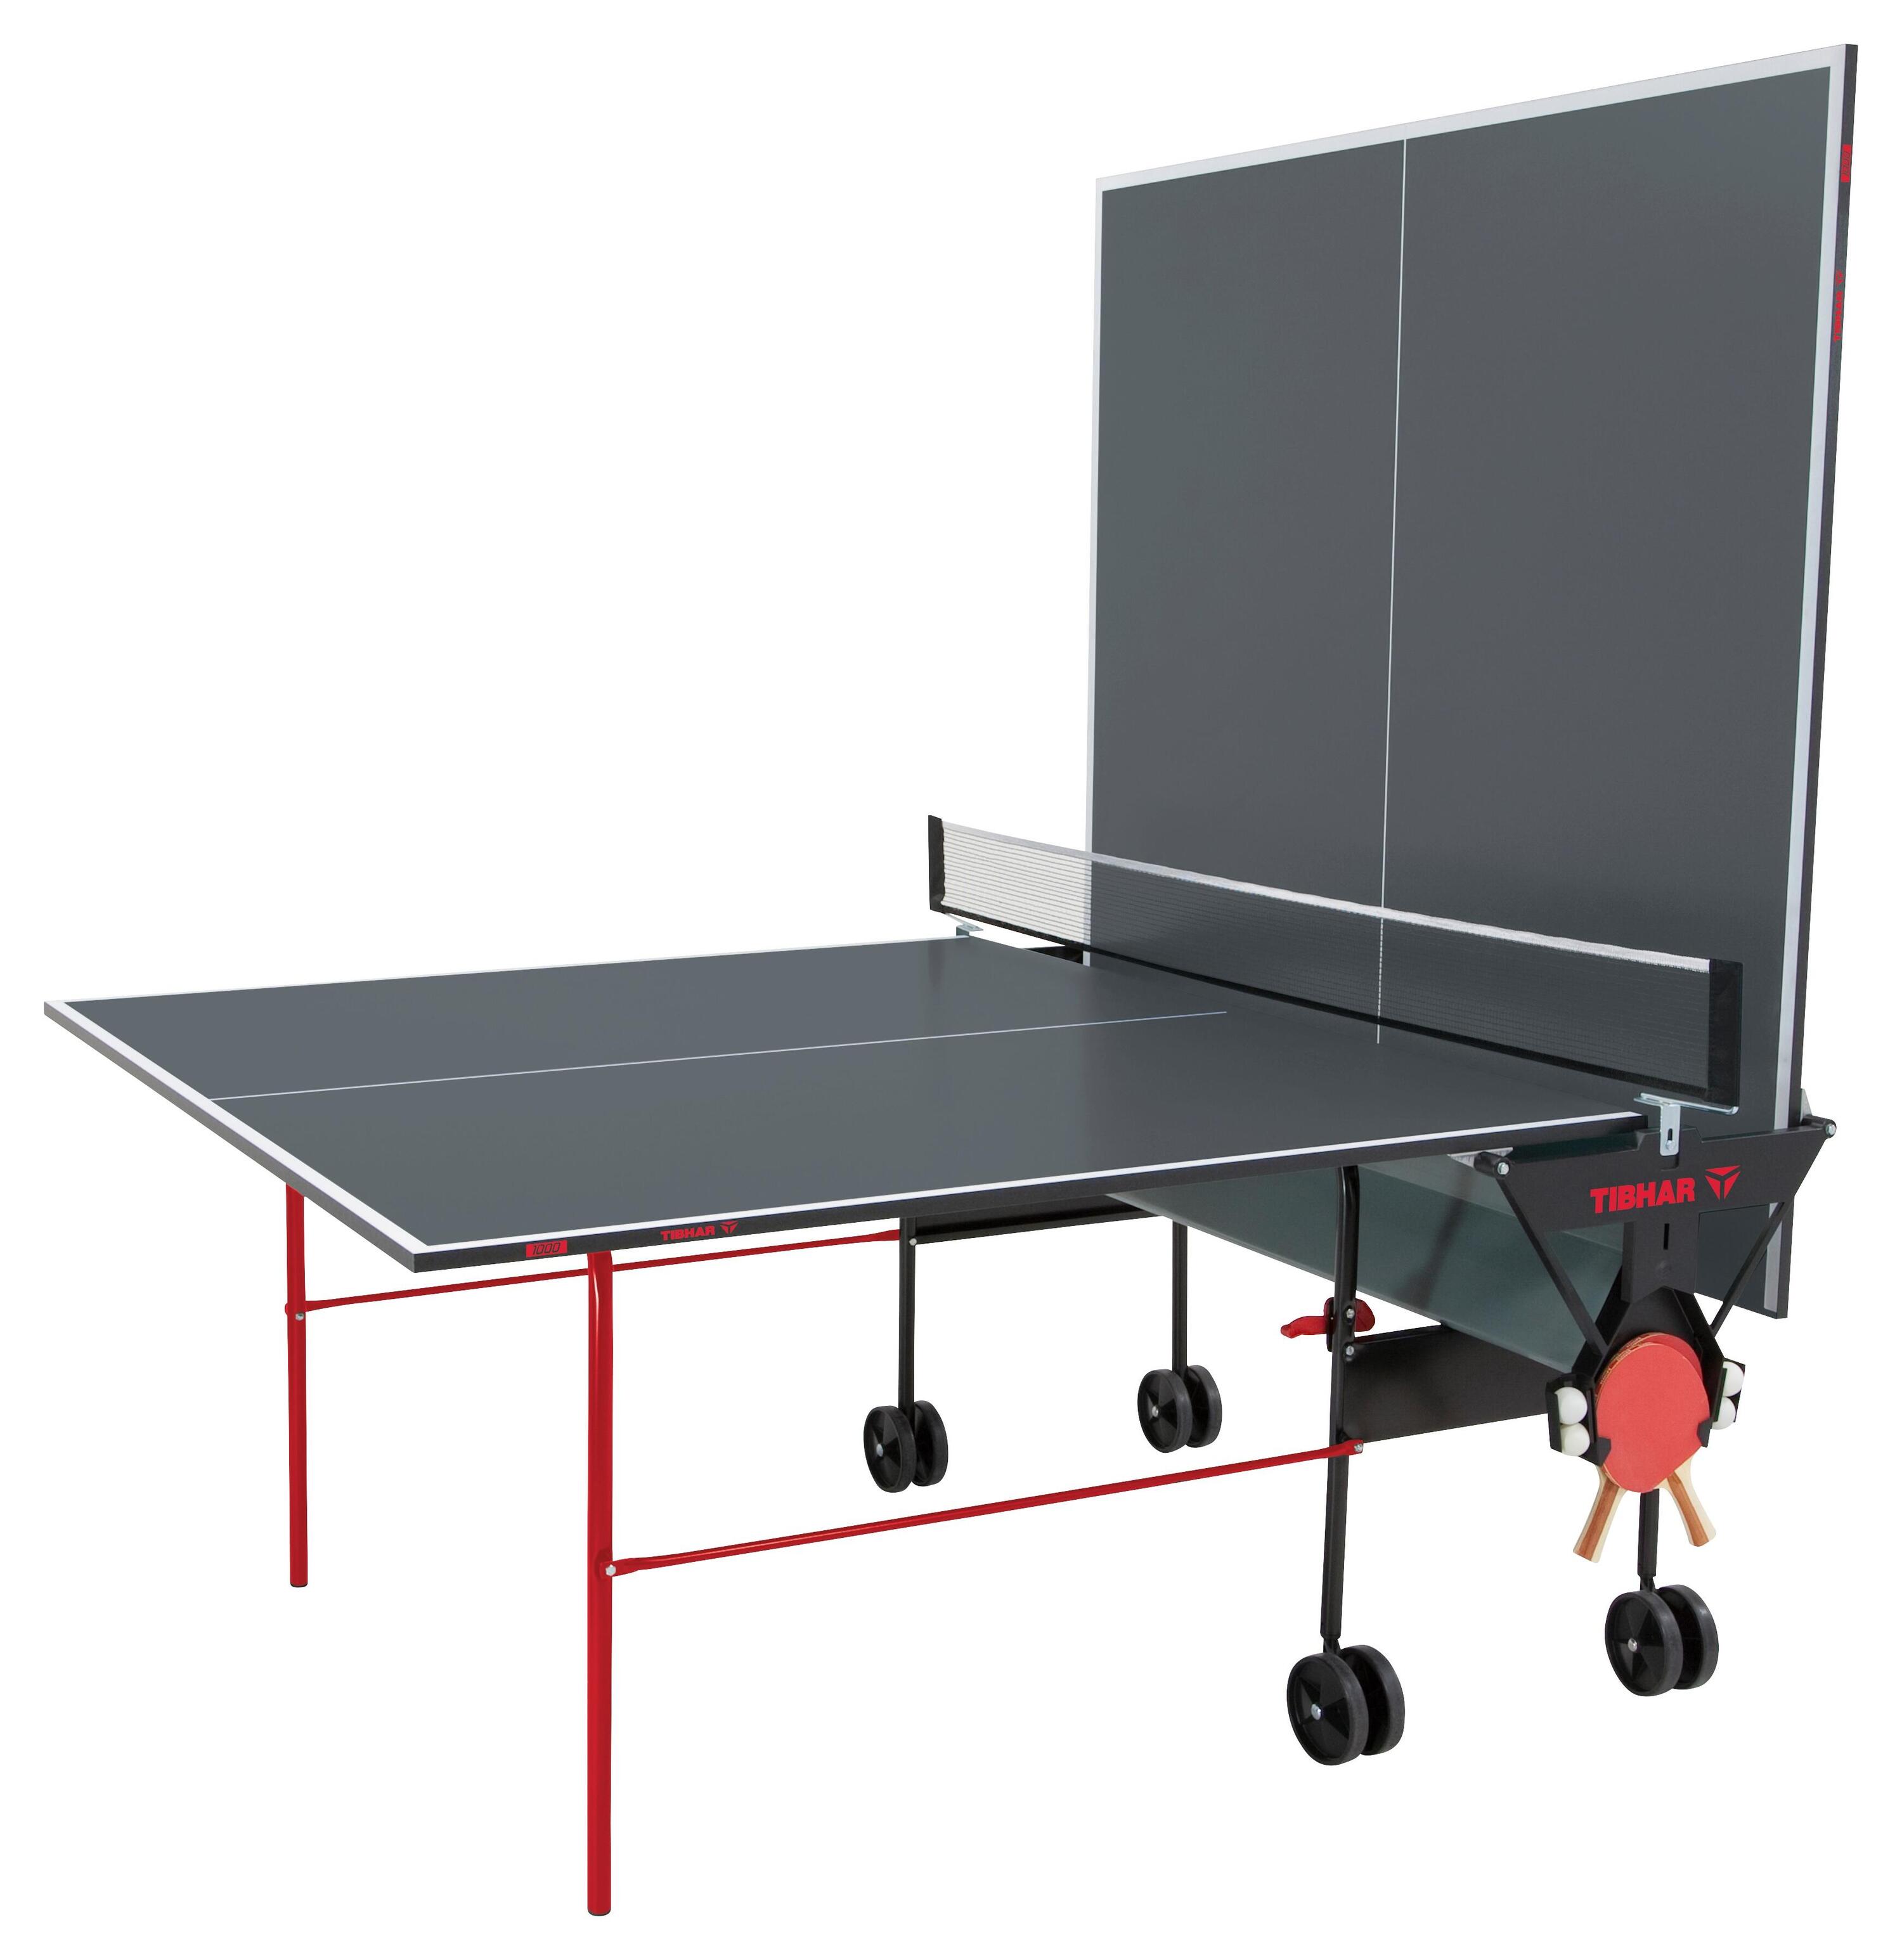 Tibhar 1000 Table Tennis Table 2/3